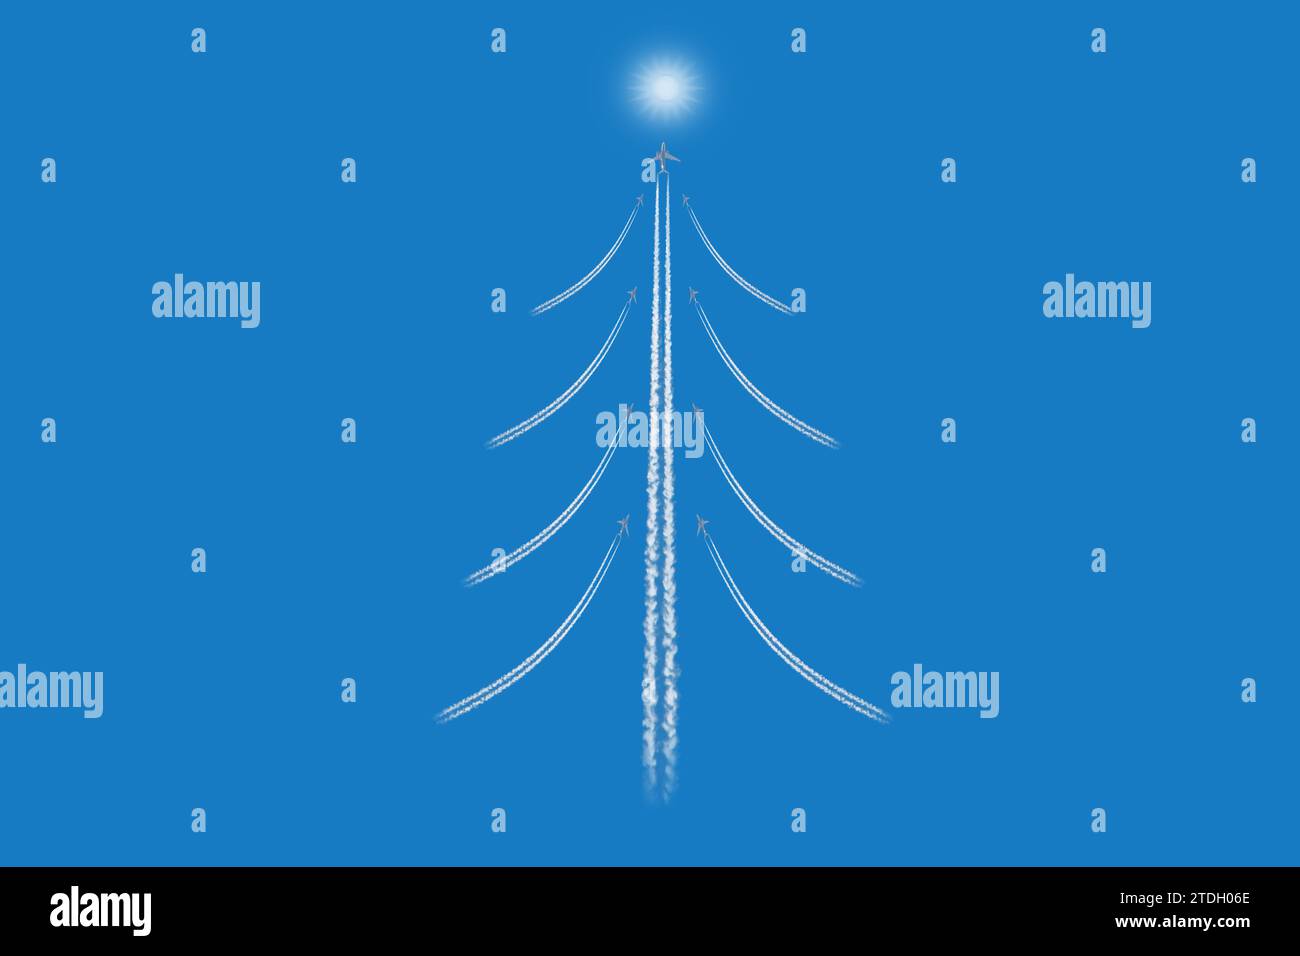 Christmas tree like figure made of airplanes trailes on blue sky  background Stock Photo